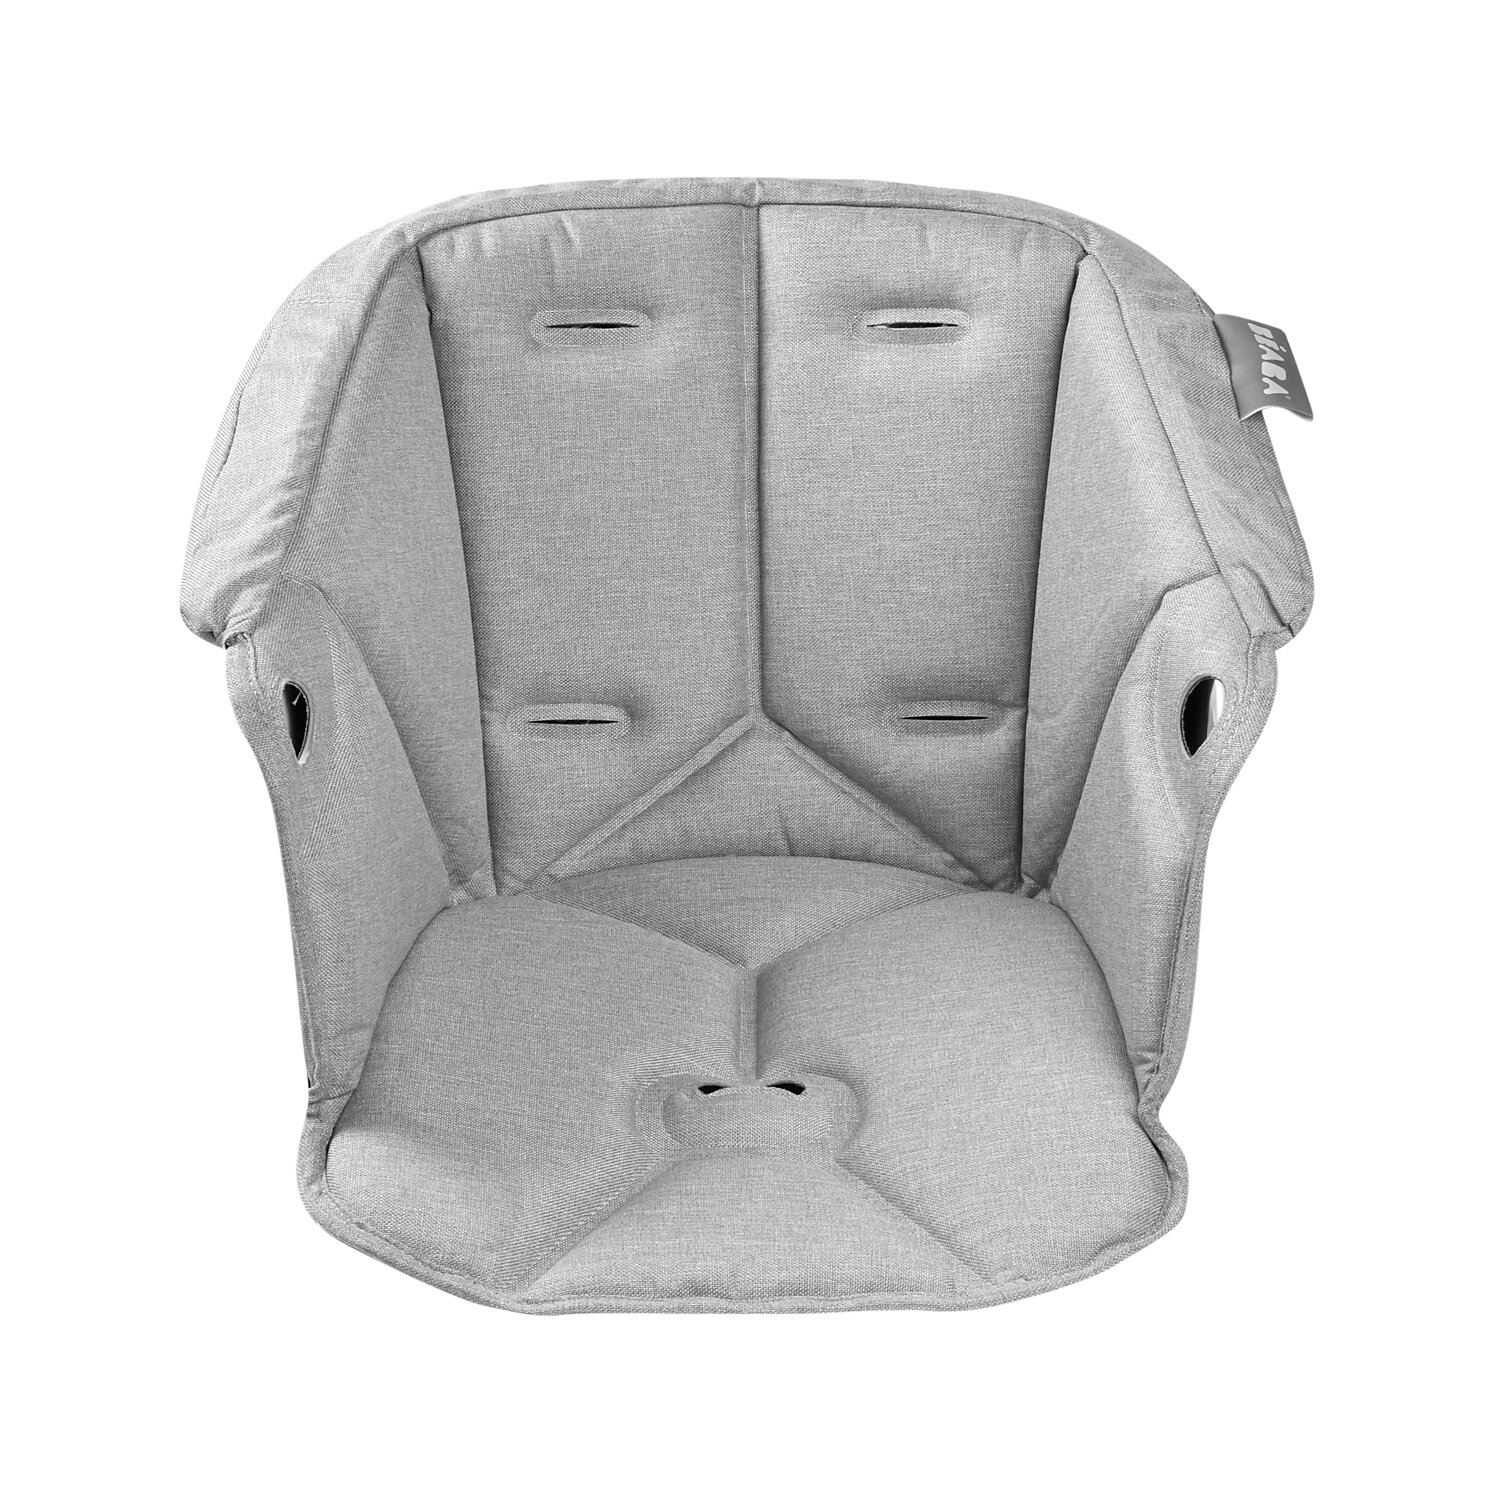 Coussin d'assise pour Chaise Haute Up&Down grey Béaba